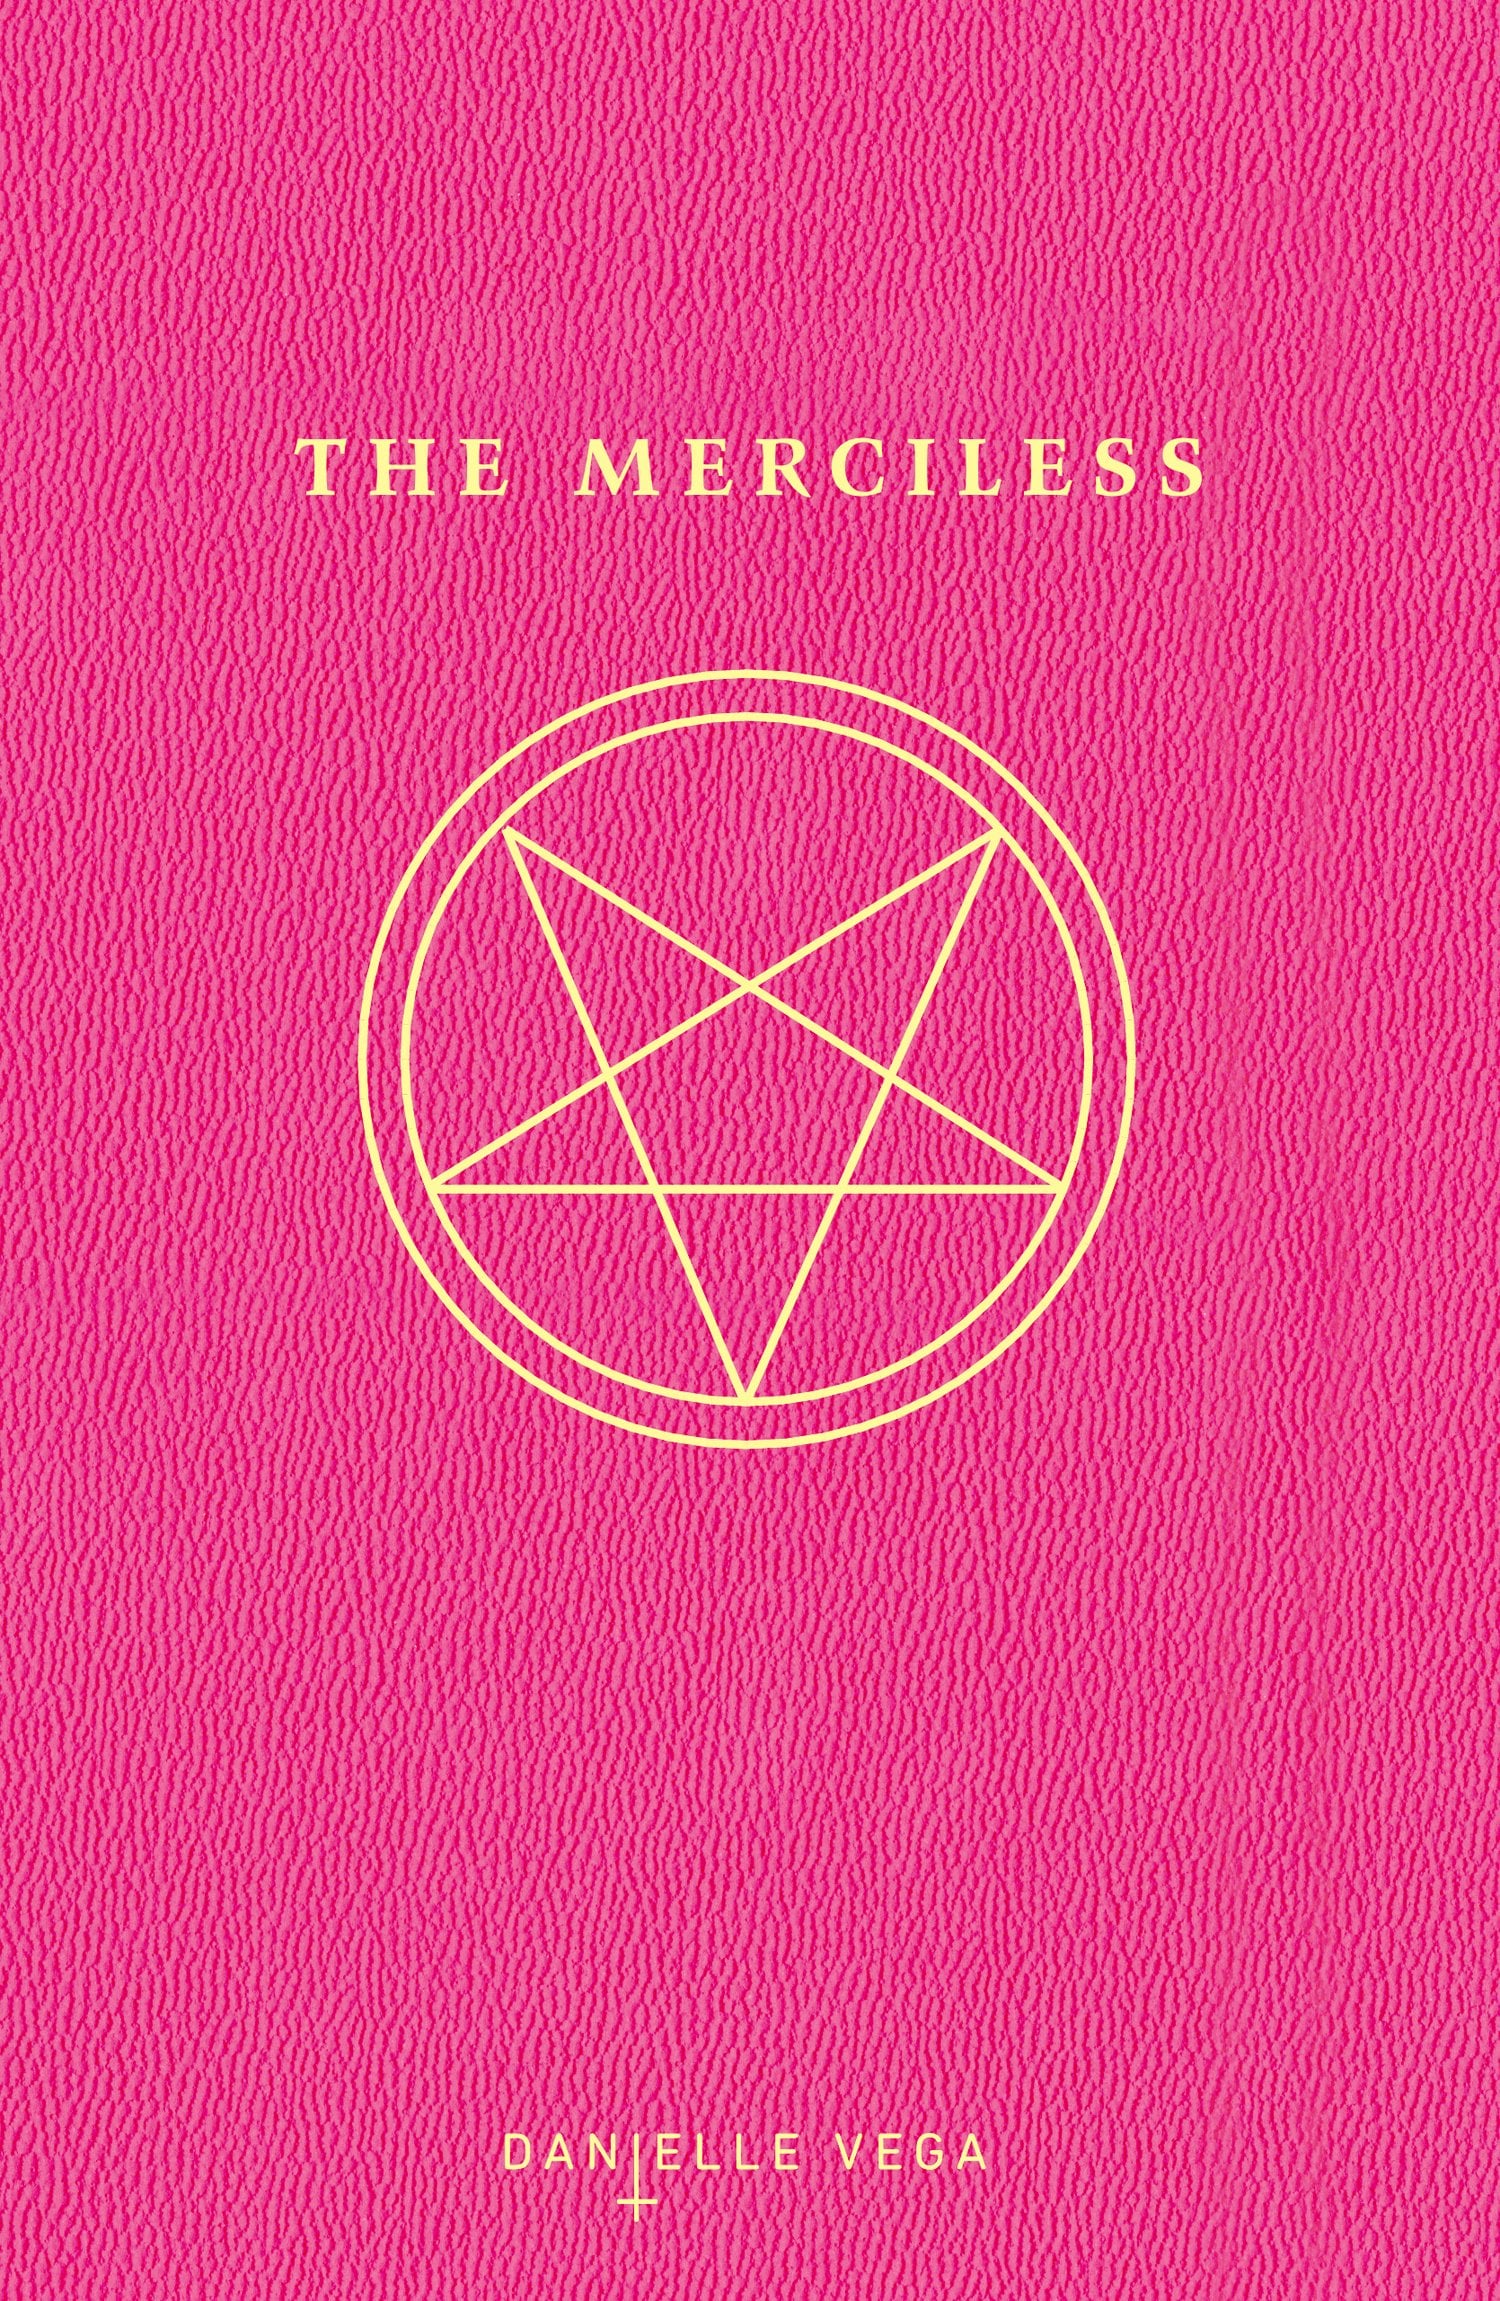 The Merciless II by Danielle Vega